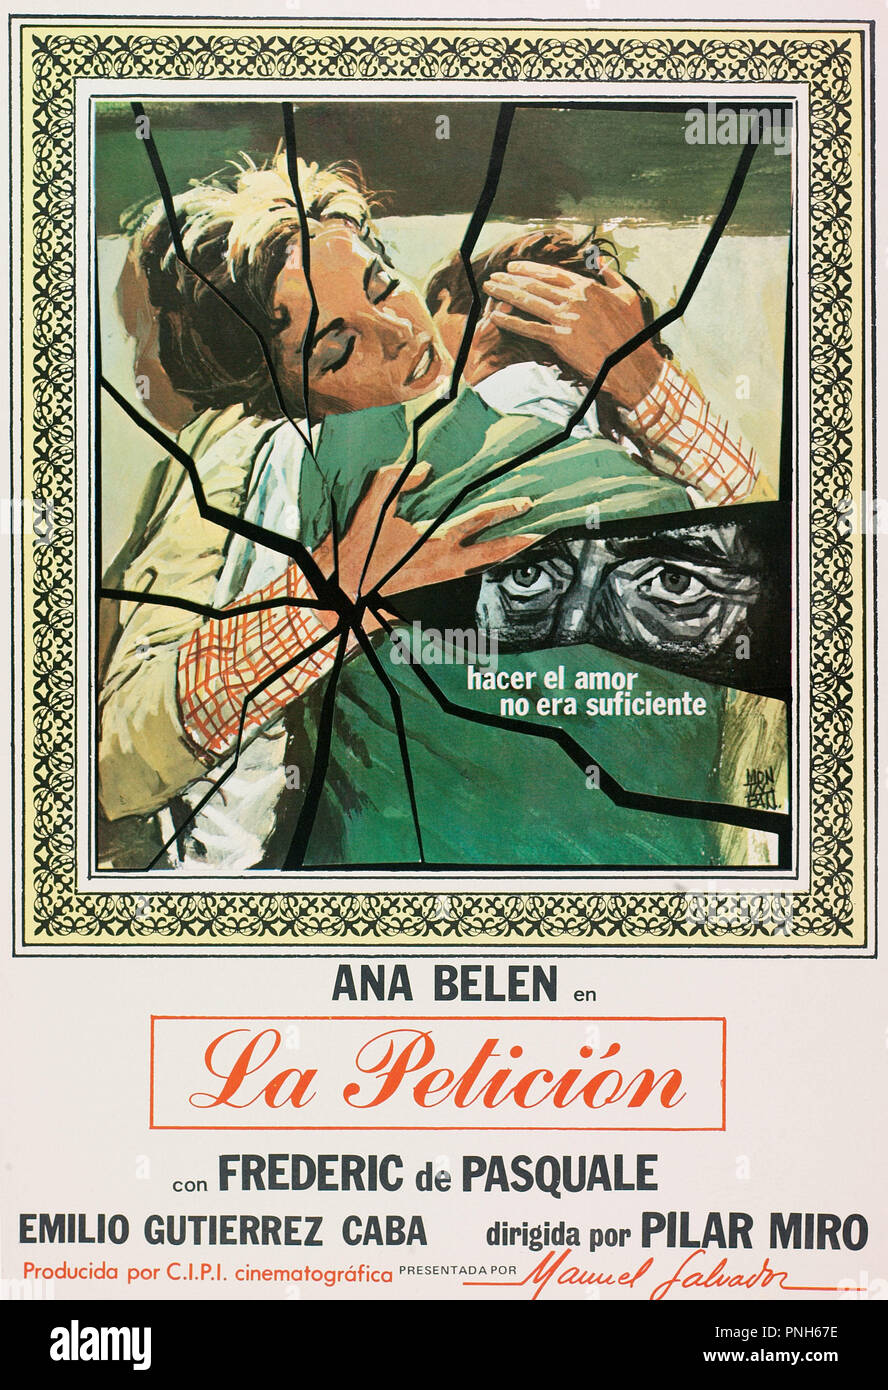 Original film title: LA PETICION. English title: THE REQUEST. Year: 1976. Director: PILAR MIRO. Credit: CIPI / Album Stock Photo